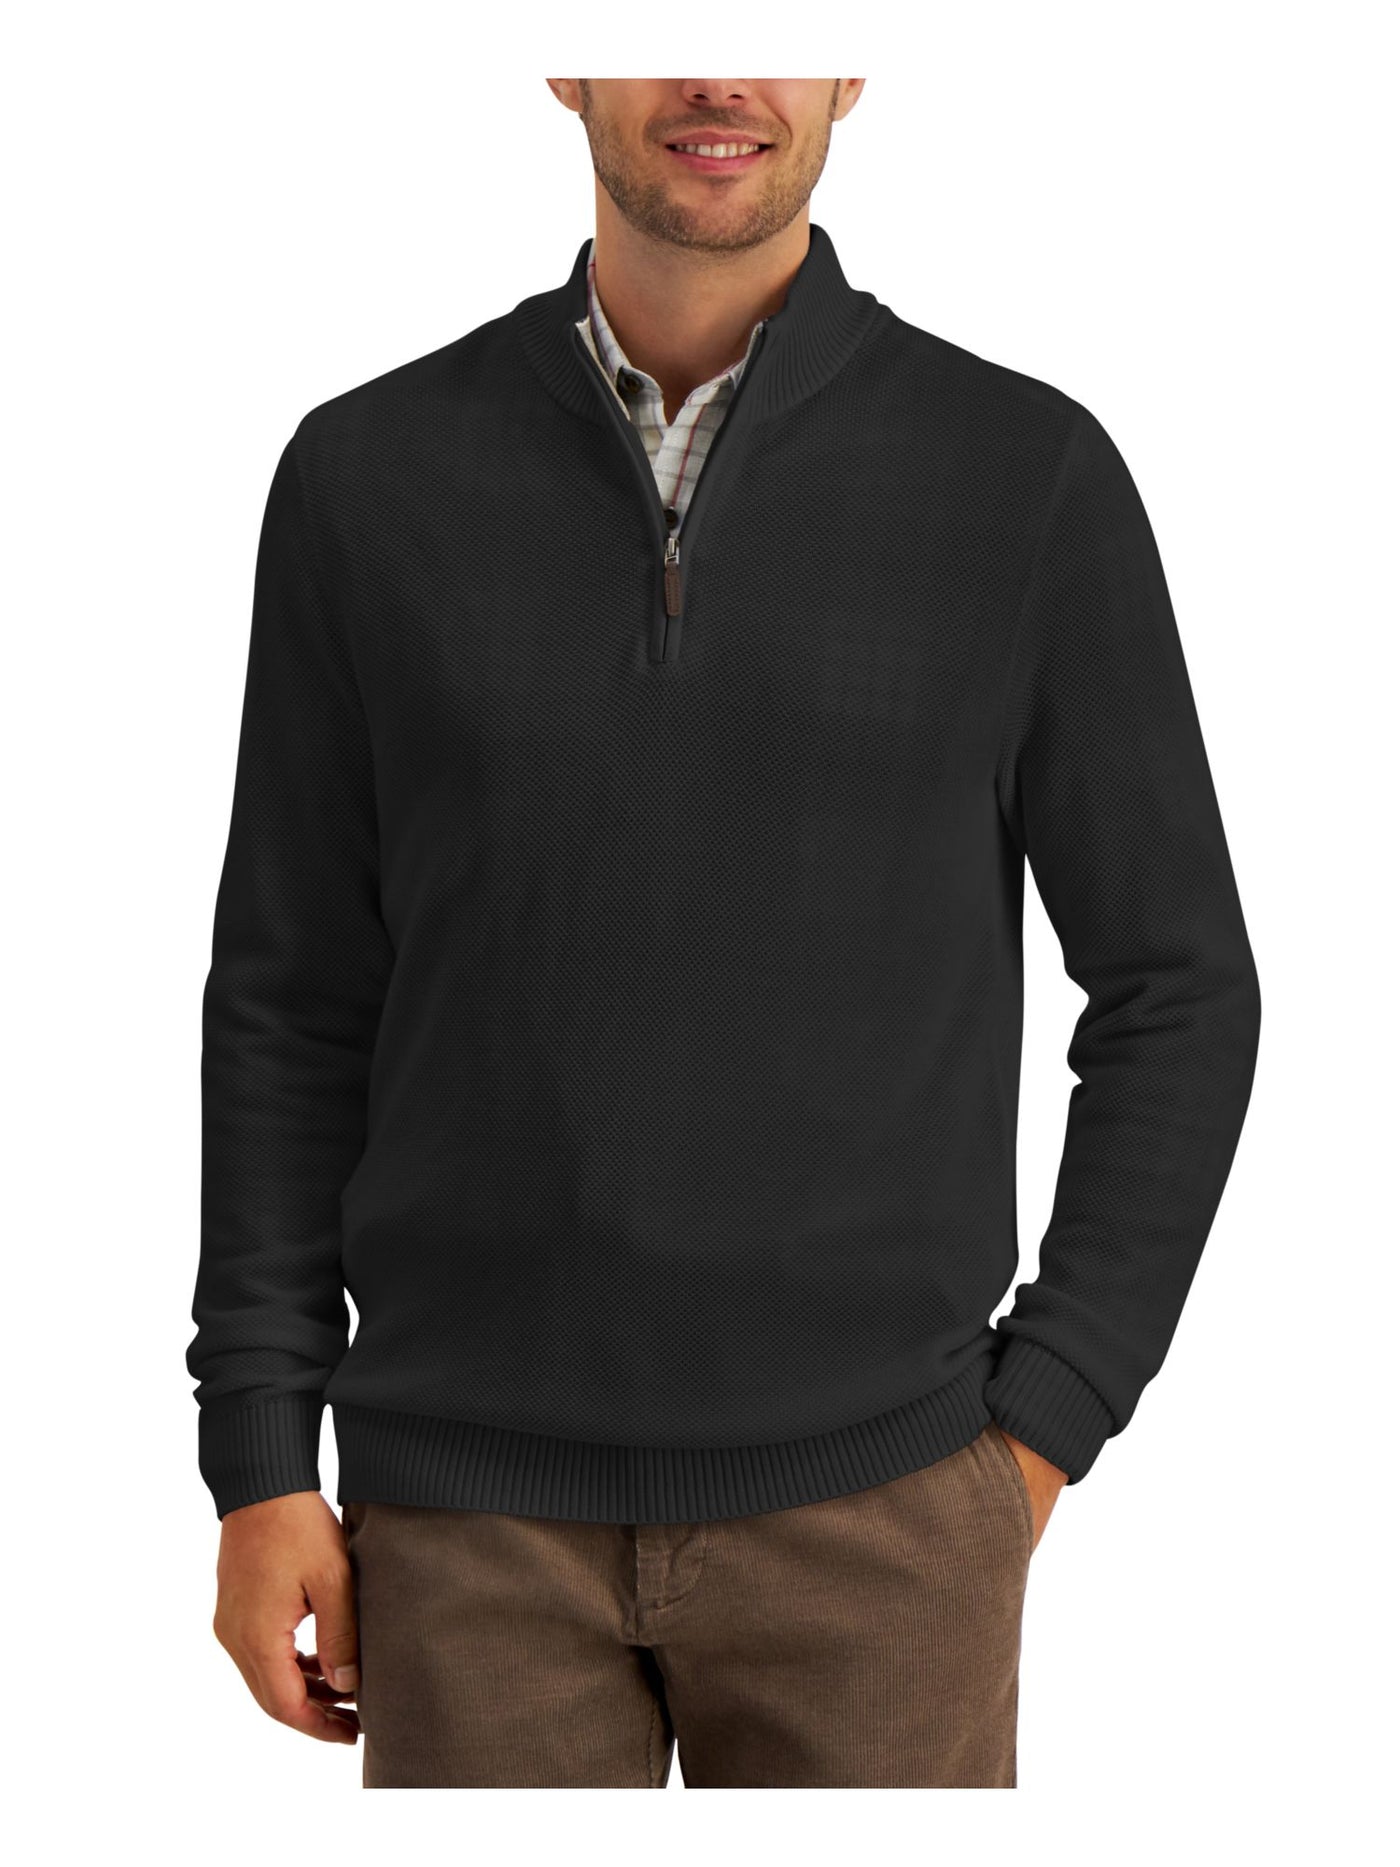 CLUBROOM Mens Black Quarter-Zip Pullover Sweater M